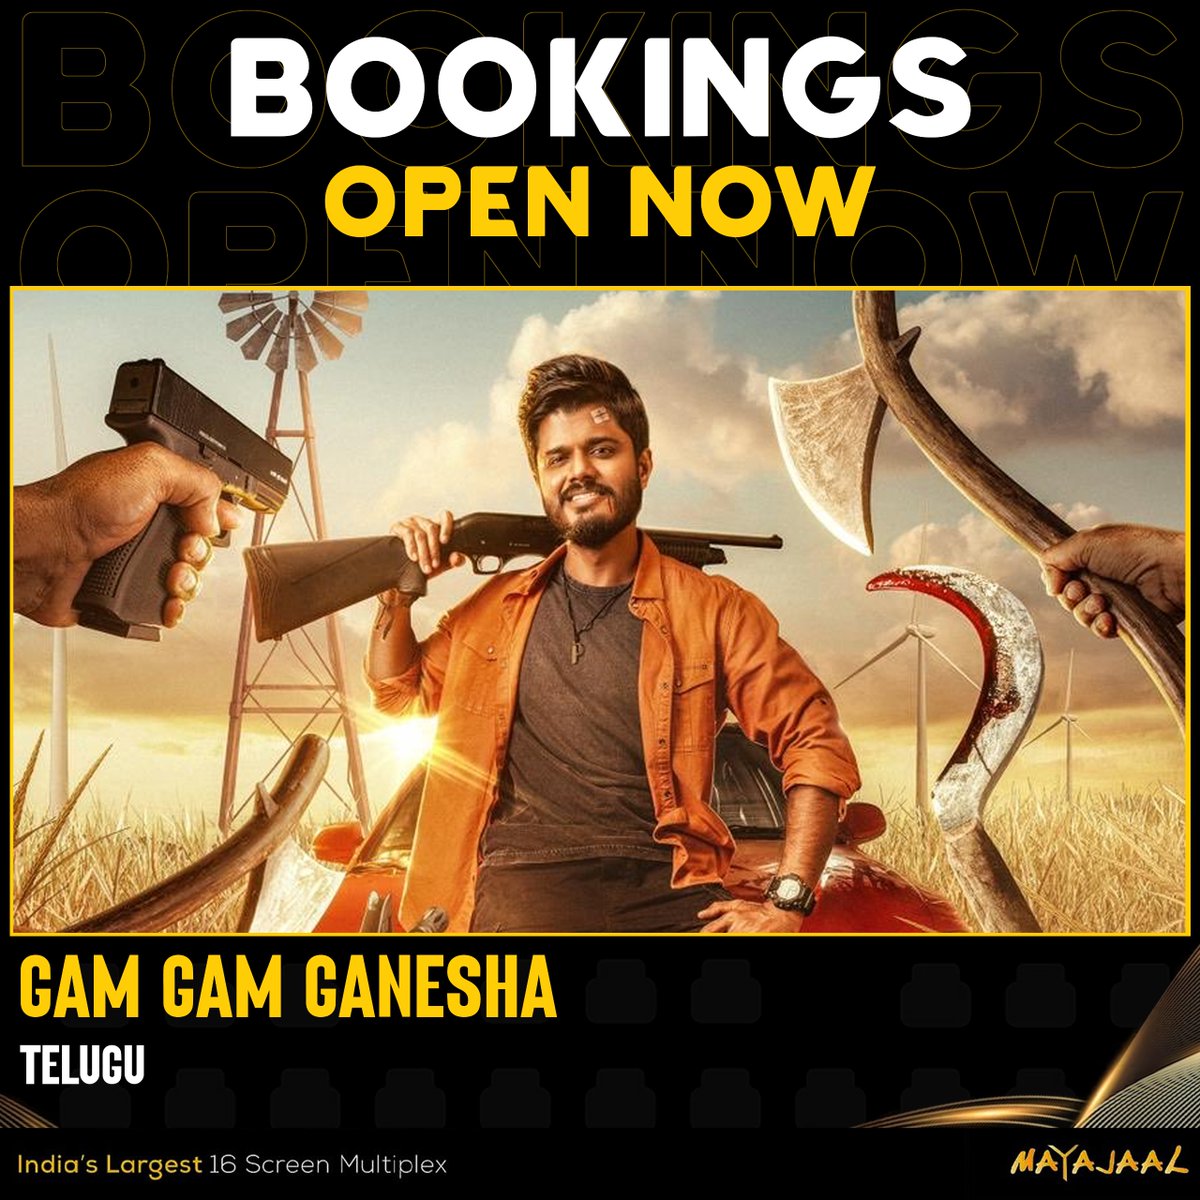 Gam Gam Ganesha is all about Chaos, comedy, and confusion 😀 Bookings open for #GamGamGanesha (Telugu) at #Mayajaal 🎟️bit.ly/3sVdbqD #GGG #AnandDeverakonda